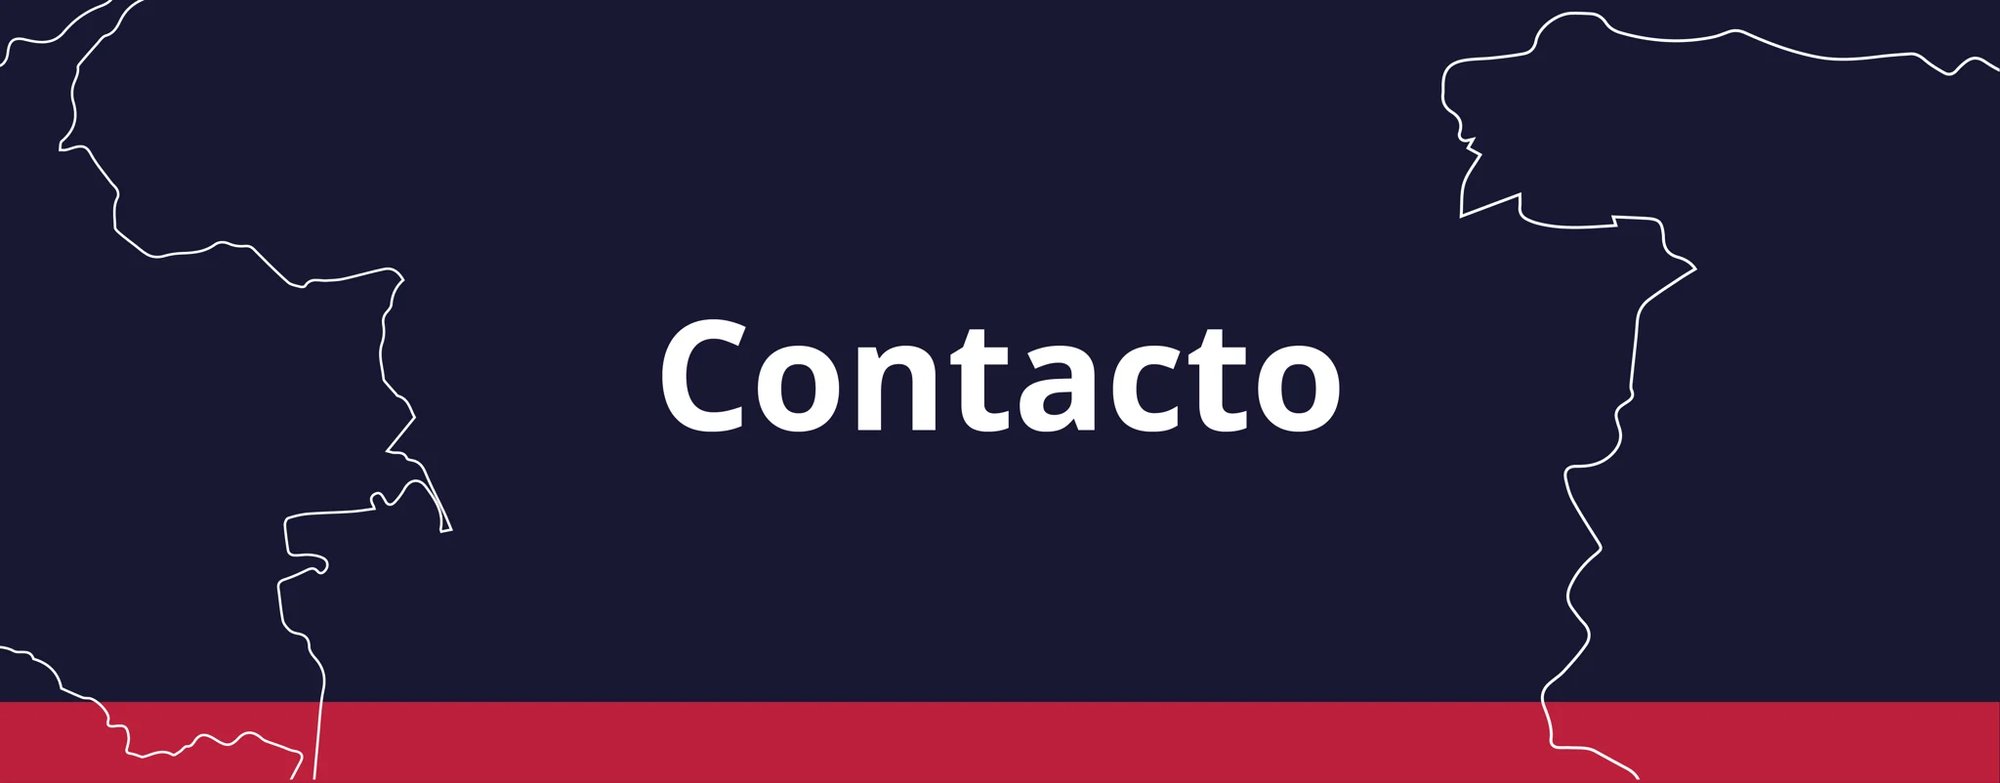 Contacto.png-1